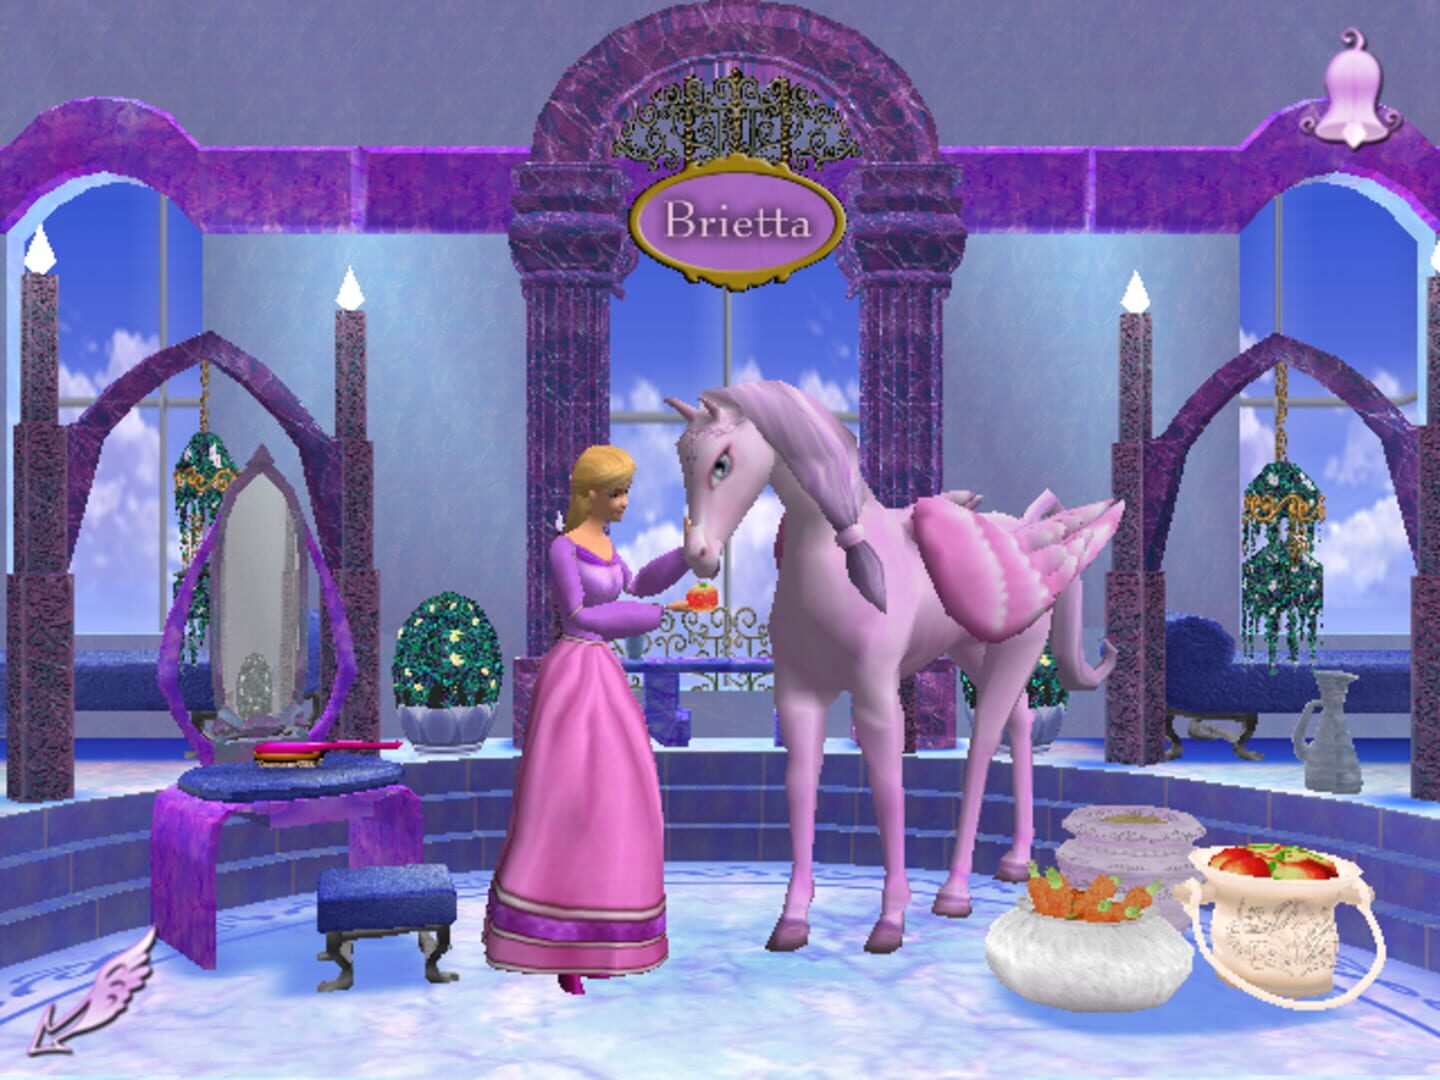 Компьютерная игра барби. Barbie and the Magic of Pegasus игра. Принцесса Барби и волшебство Пегаса. Барби принцесса и Пегас. Барби и волшебство Пегаса Пегас.